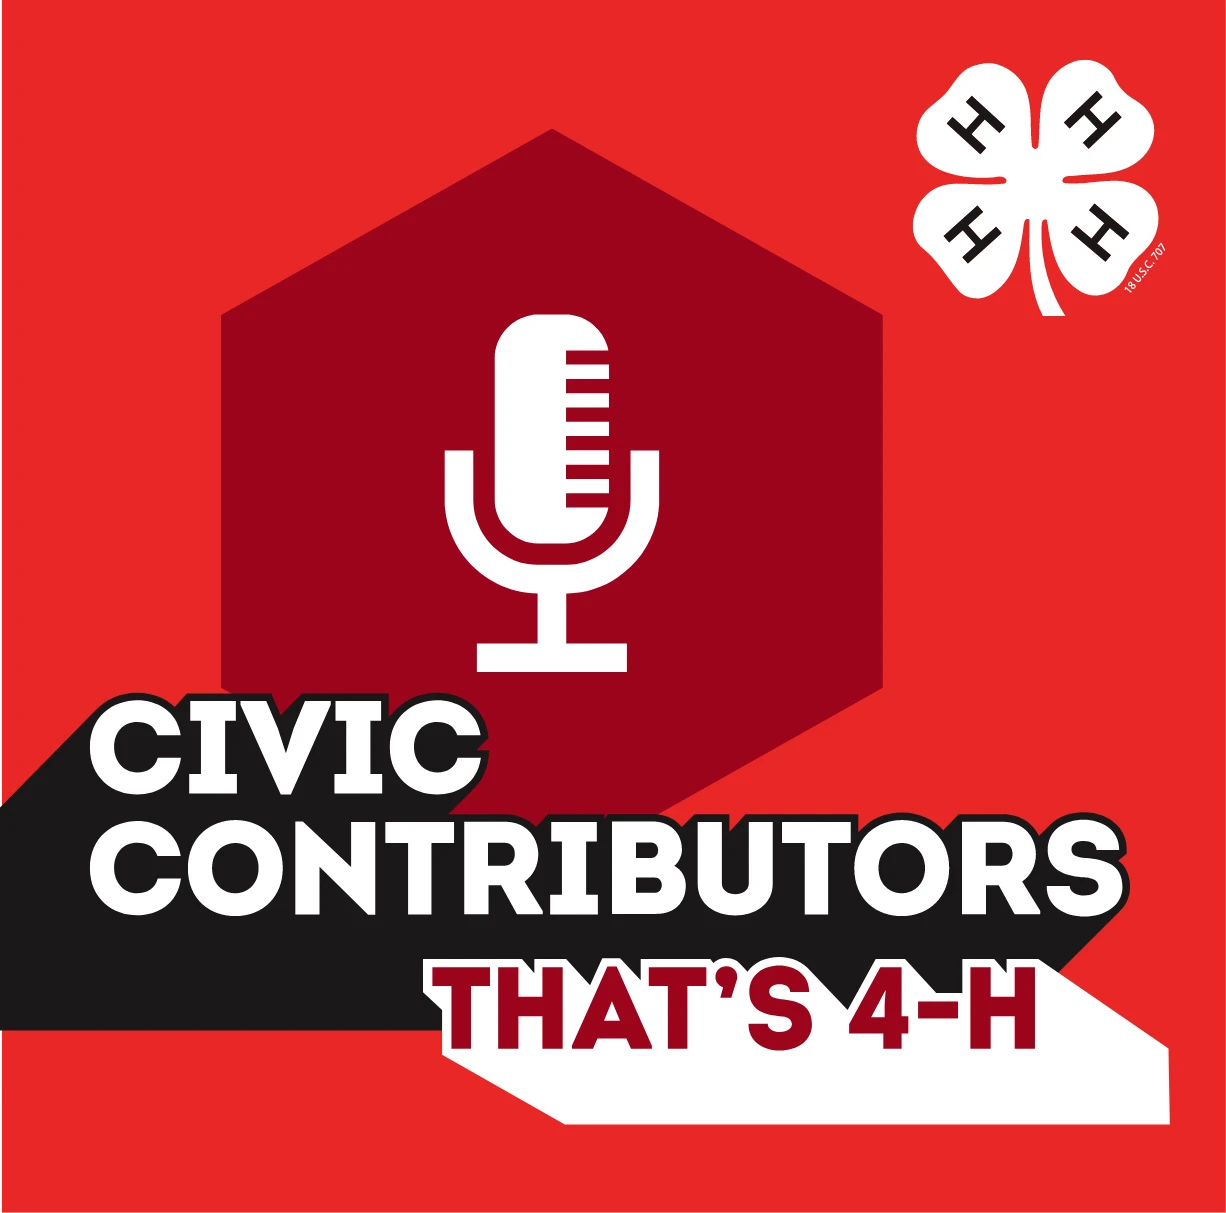 Civic contributors that's 4 h.